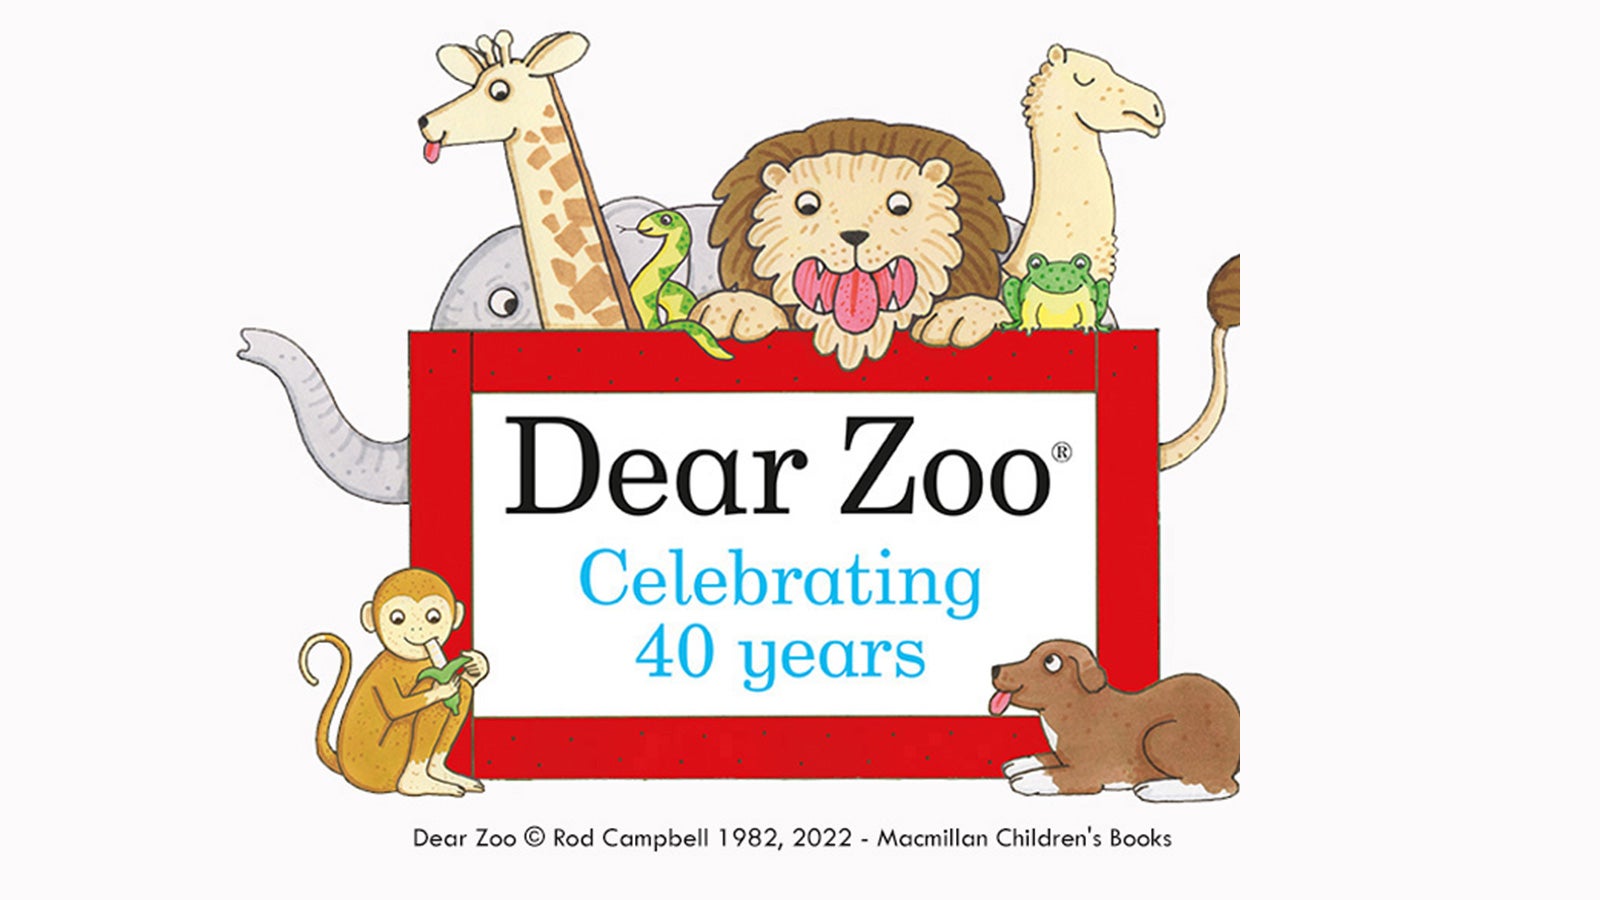 A Dear Zoo 'Celebrating 40 years' logo